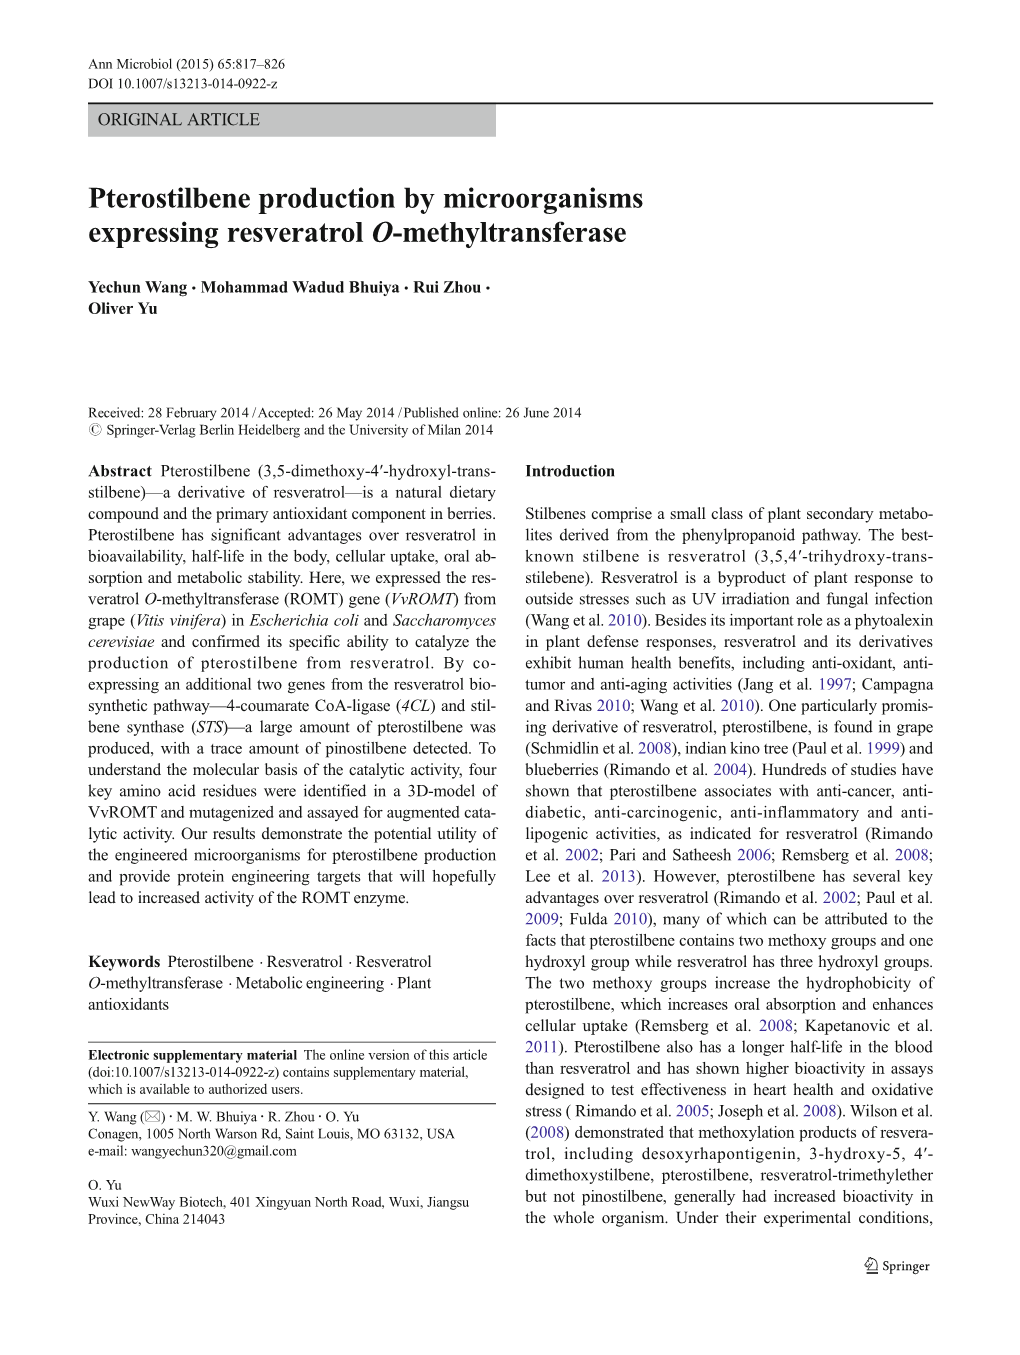 Pterostilbene Production by Microorganisms Expressing Resveratrol O-Methyltransferase